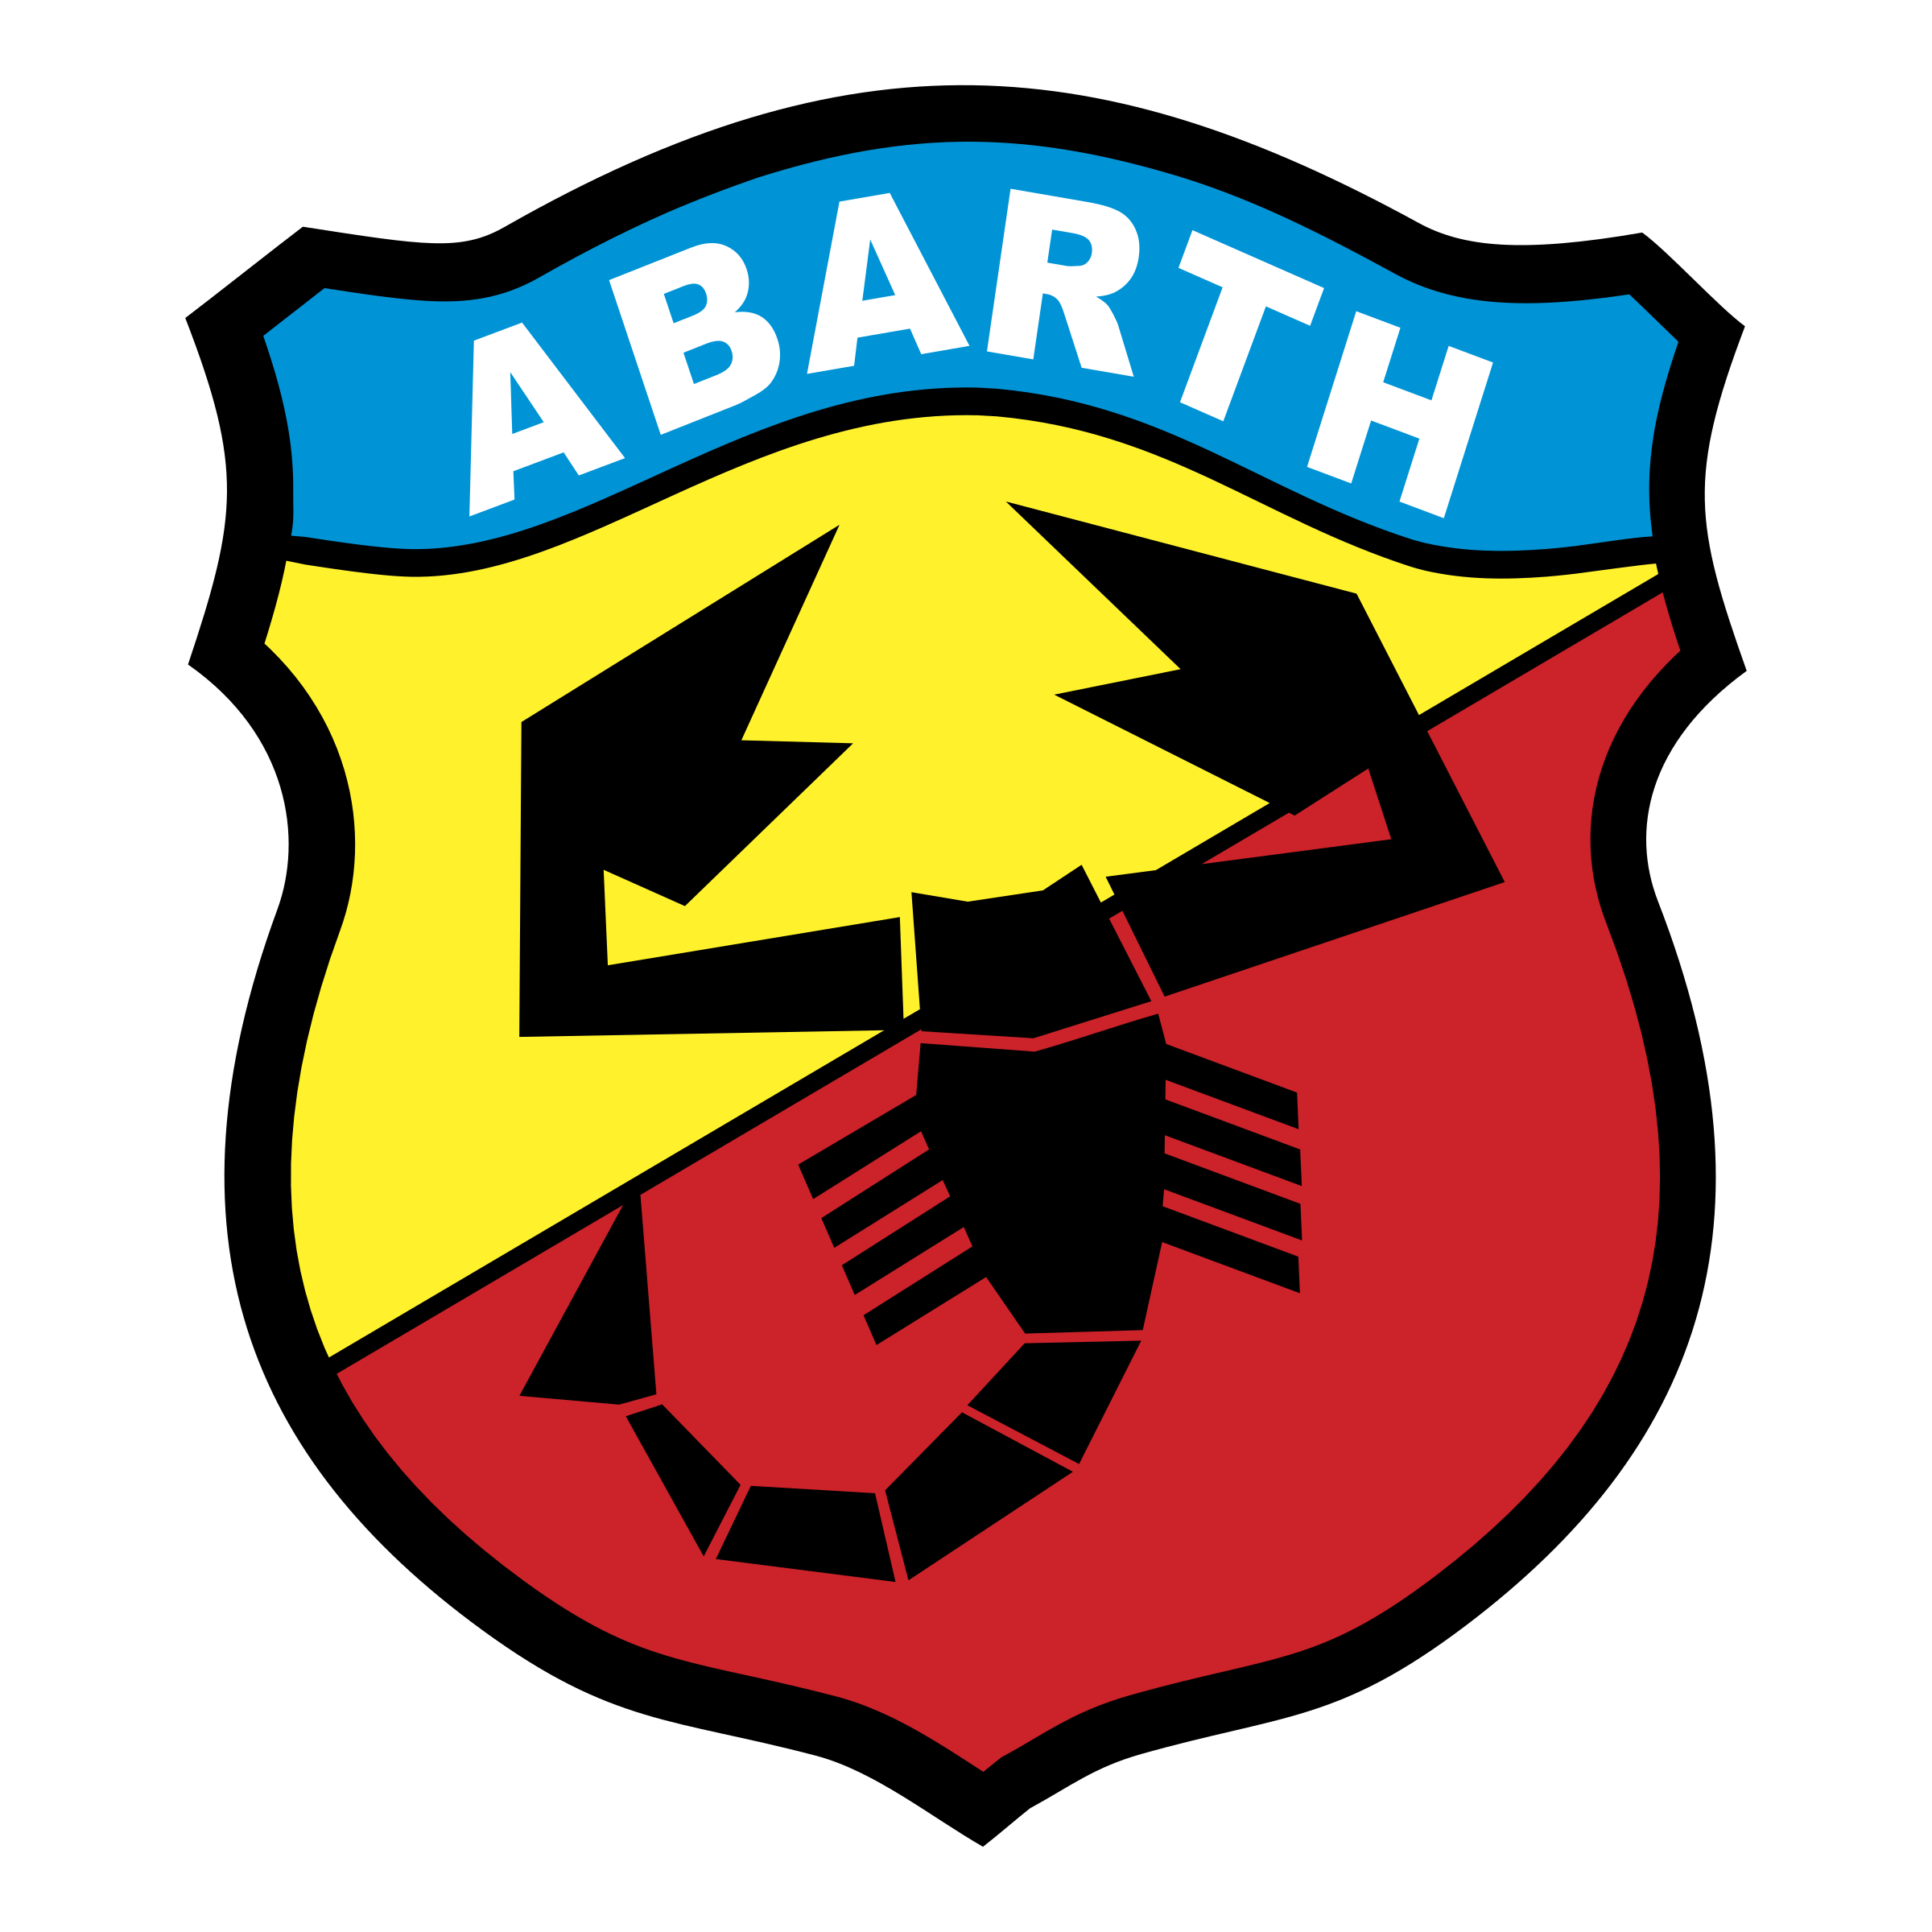 Abarth Logo - Abarth Logo PNG Transparent & SVG Vector - Freebie Supply